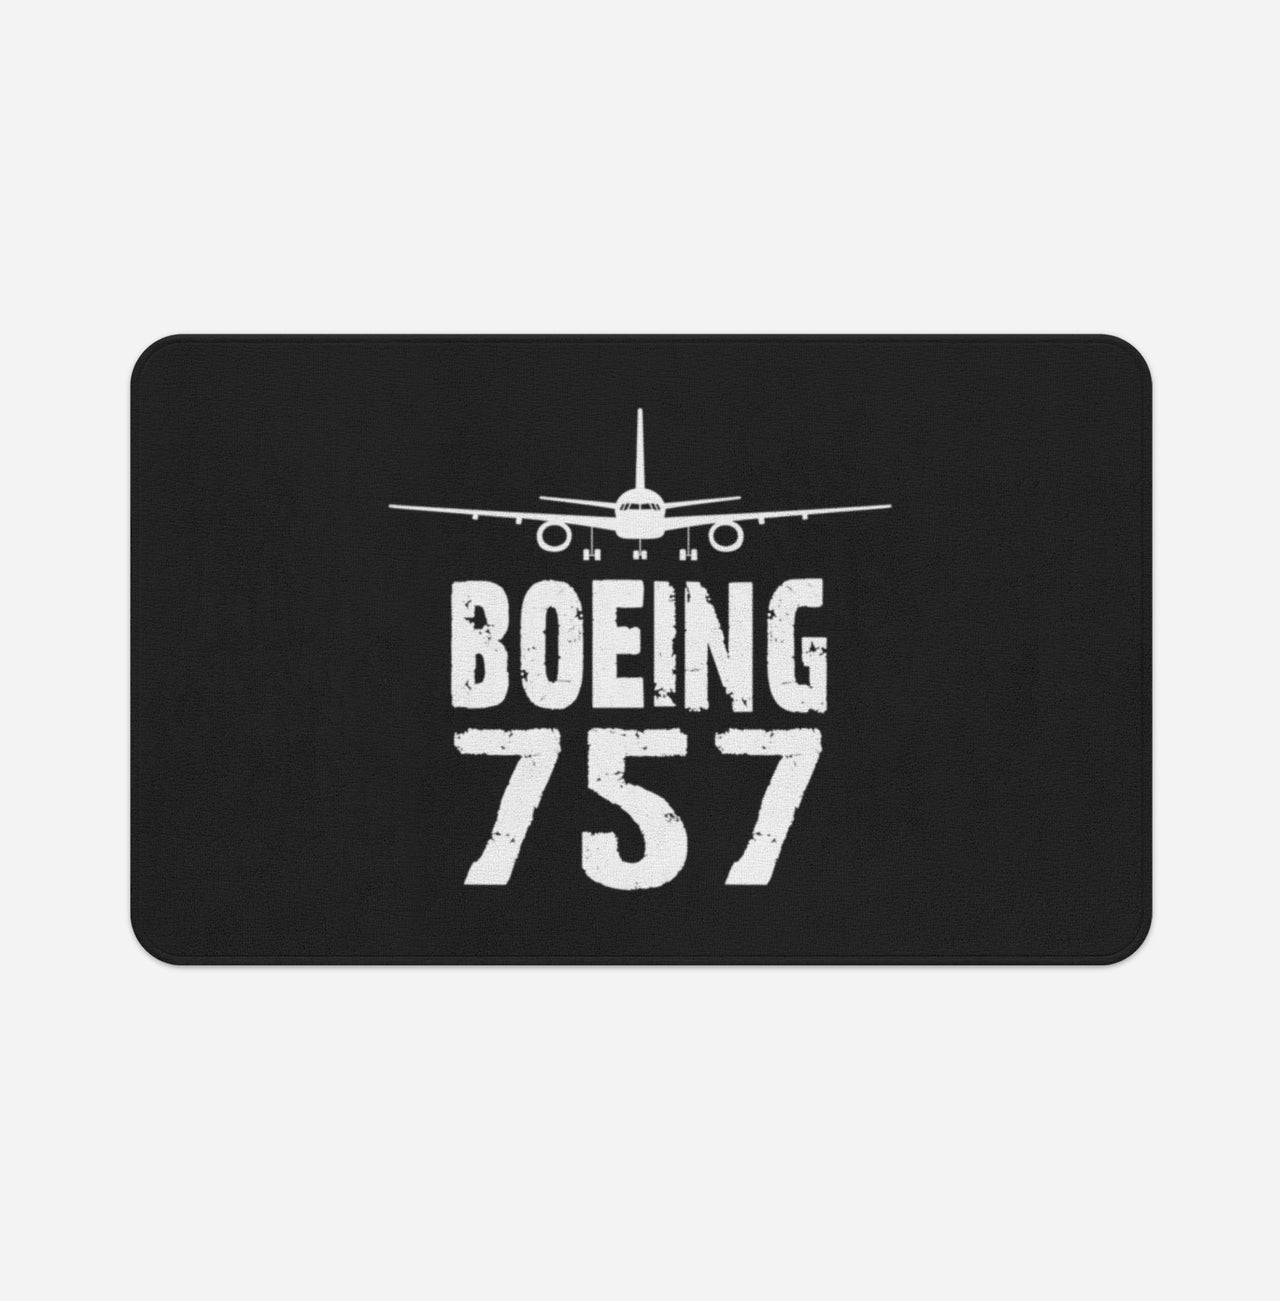 Boeing 757 & Plane Designed Bath Mats